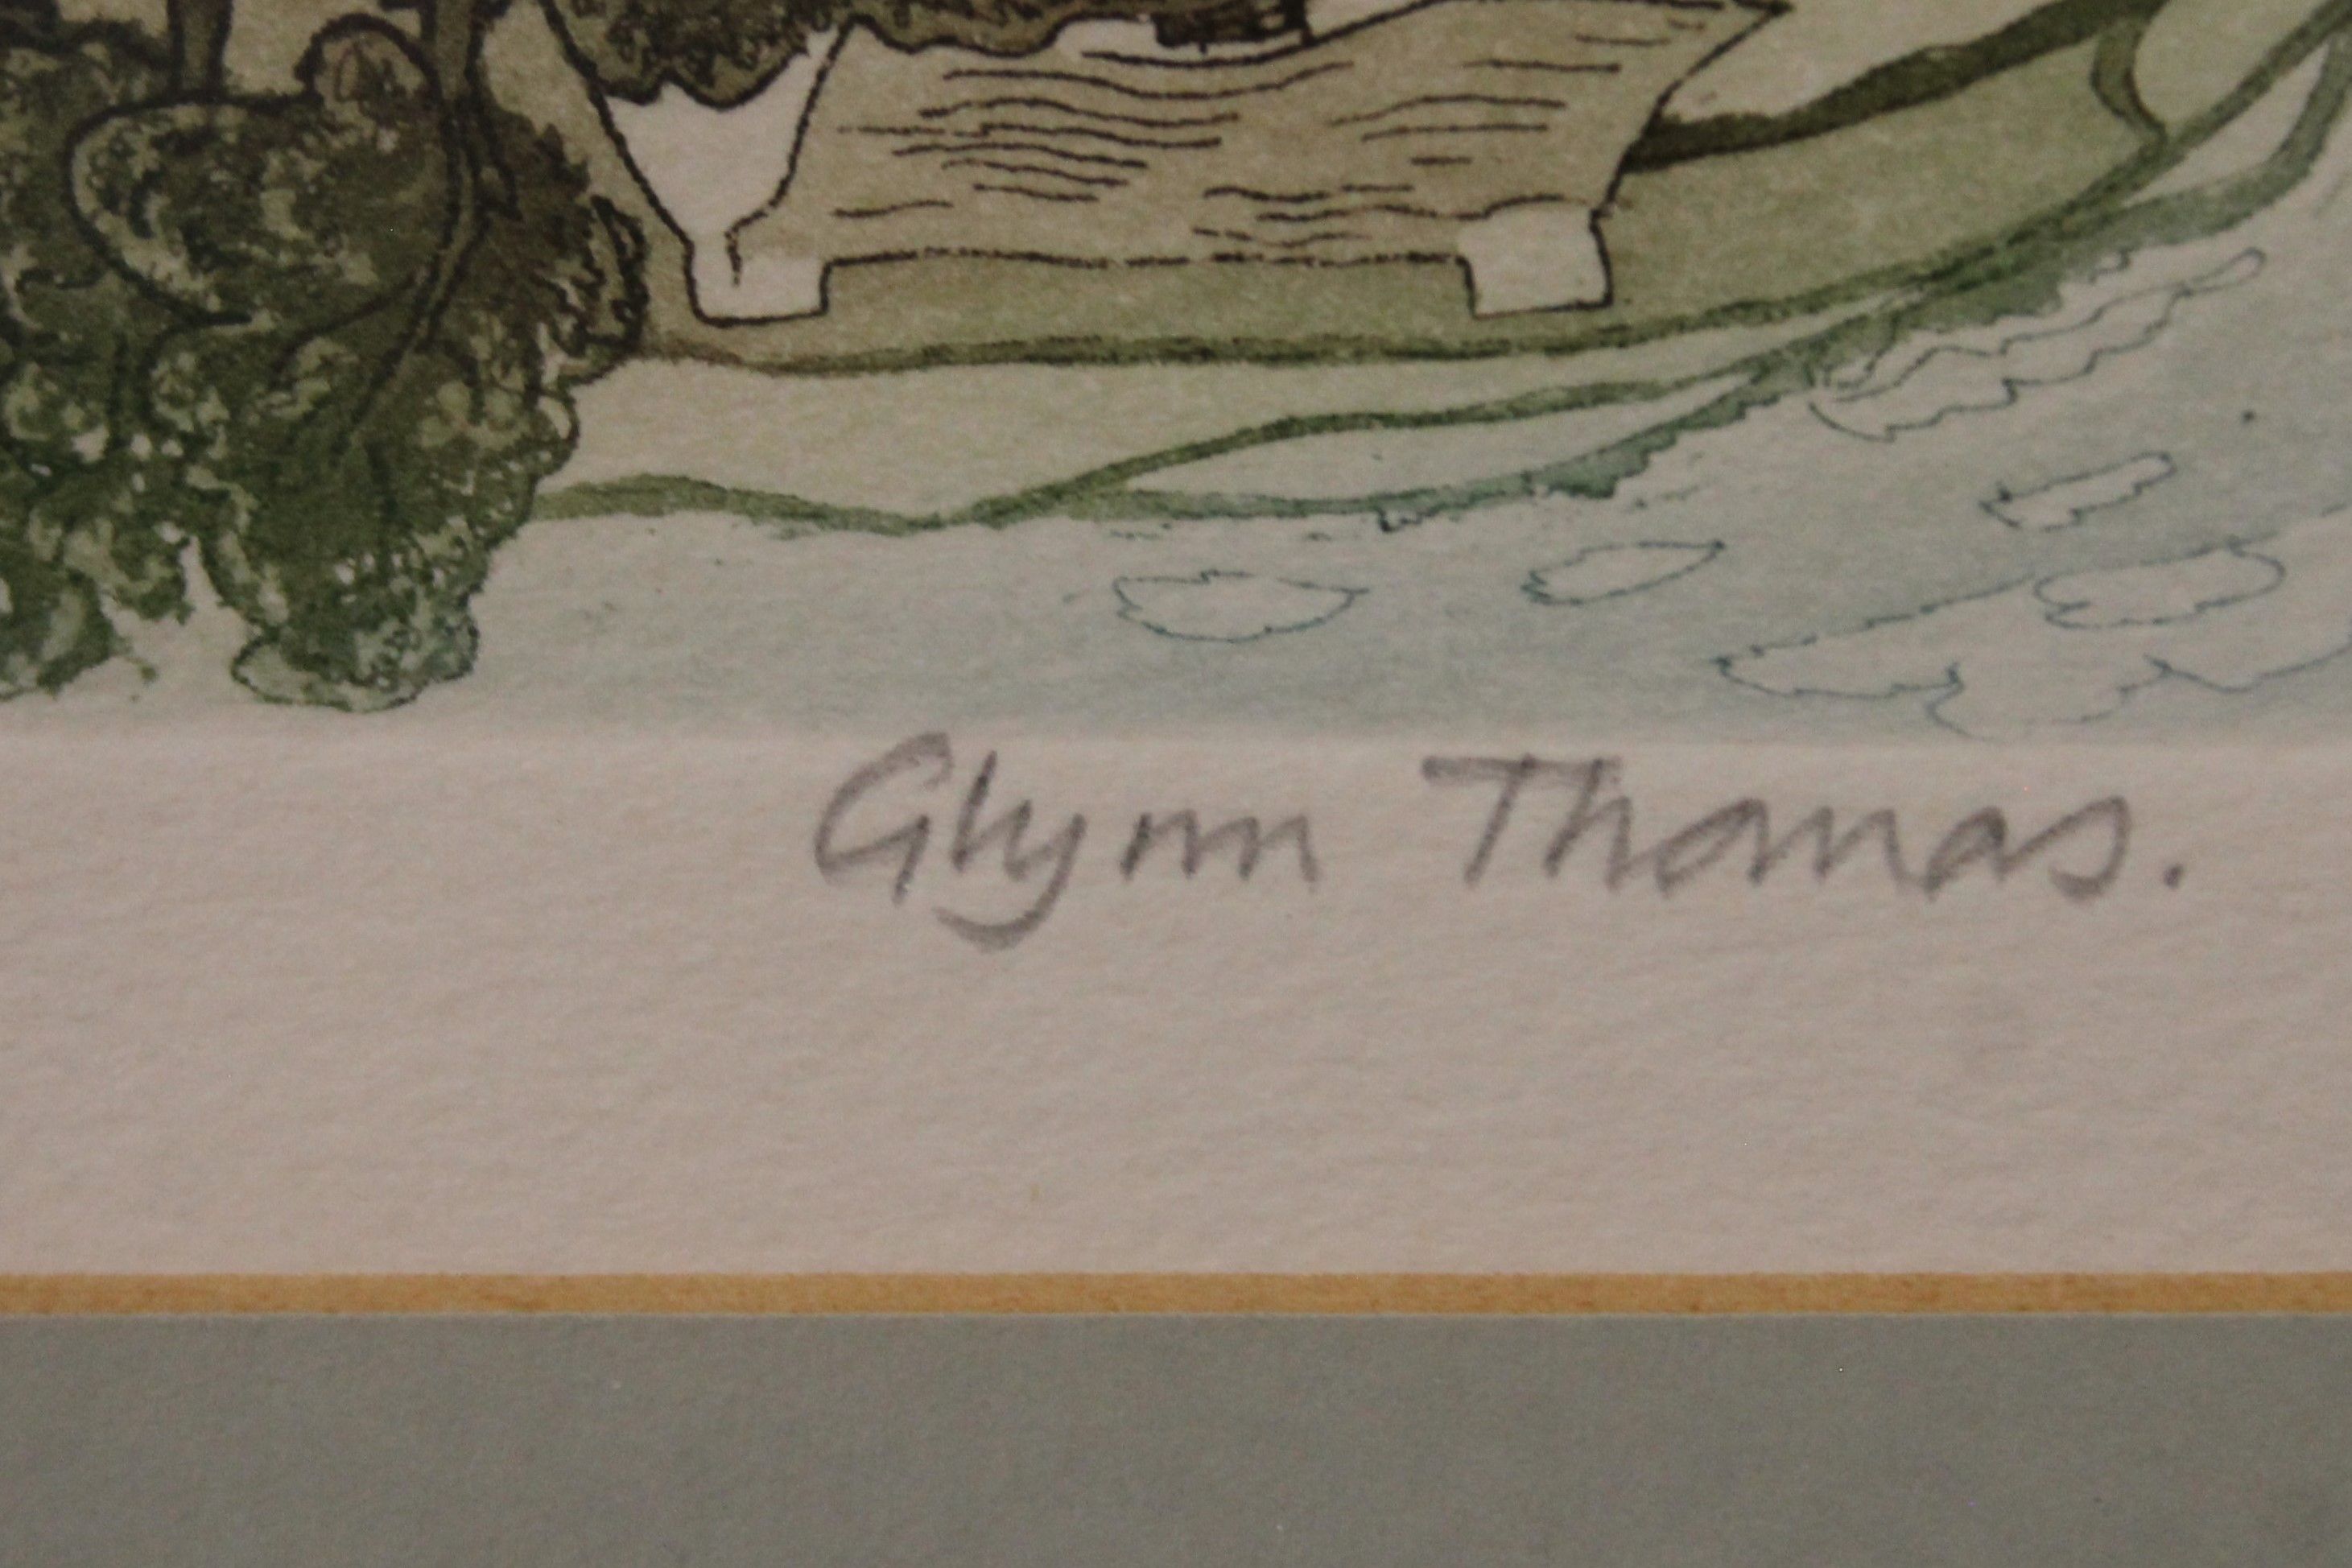 GLYNN THOMAS, Cornish Farmyard, limited edition print, numbered 46/100, - Image 3 of 3